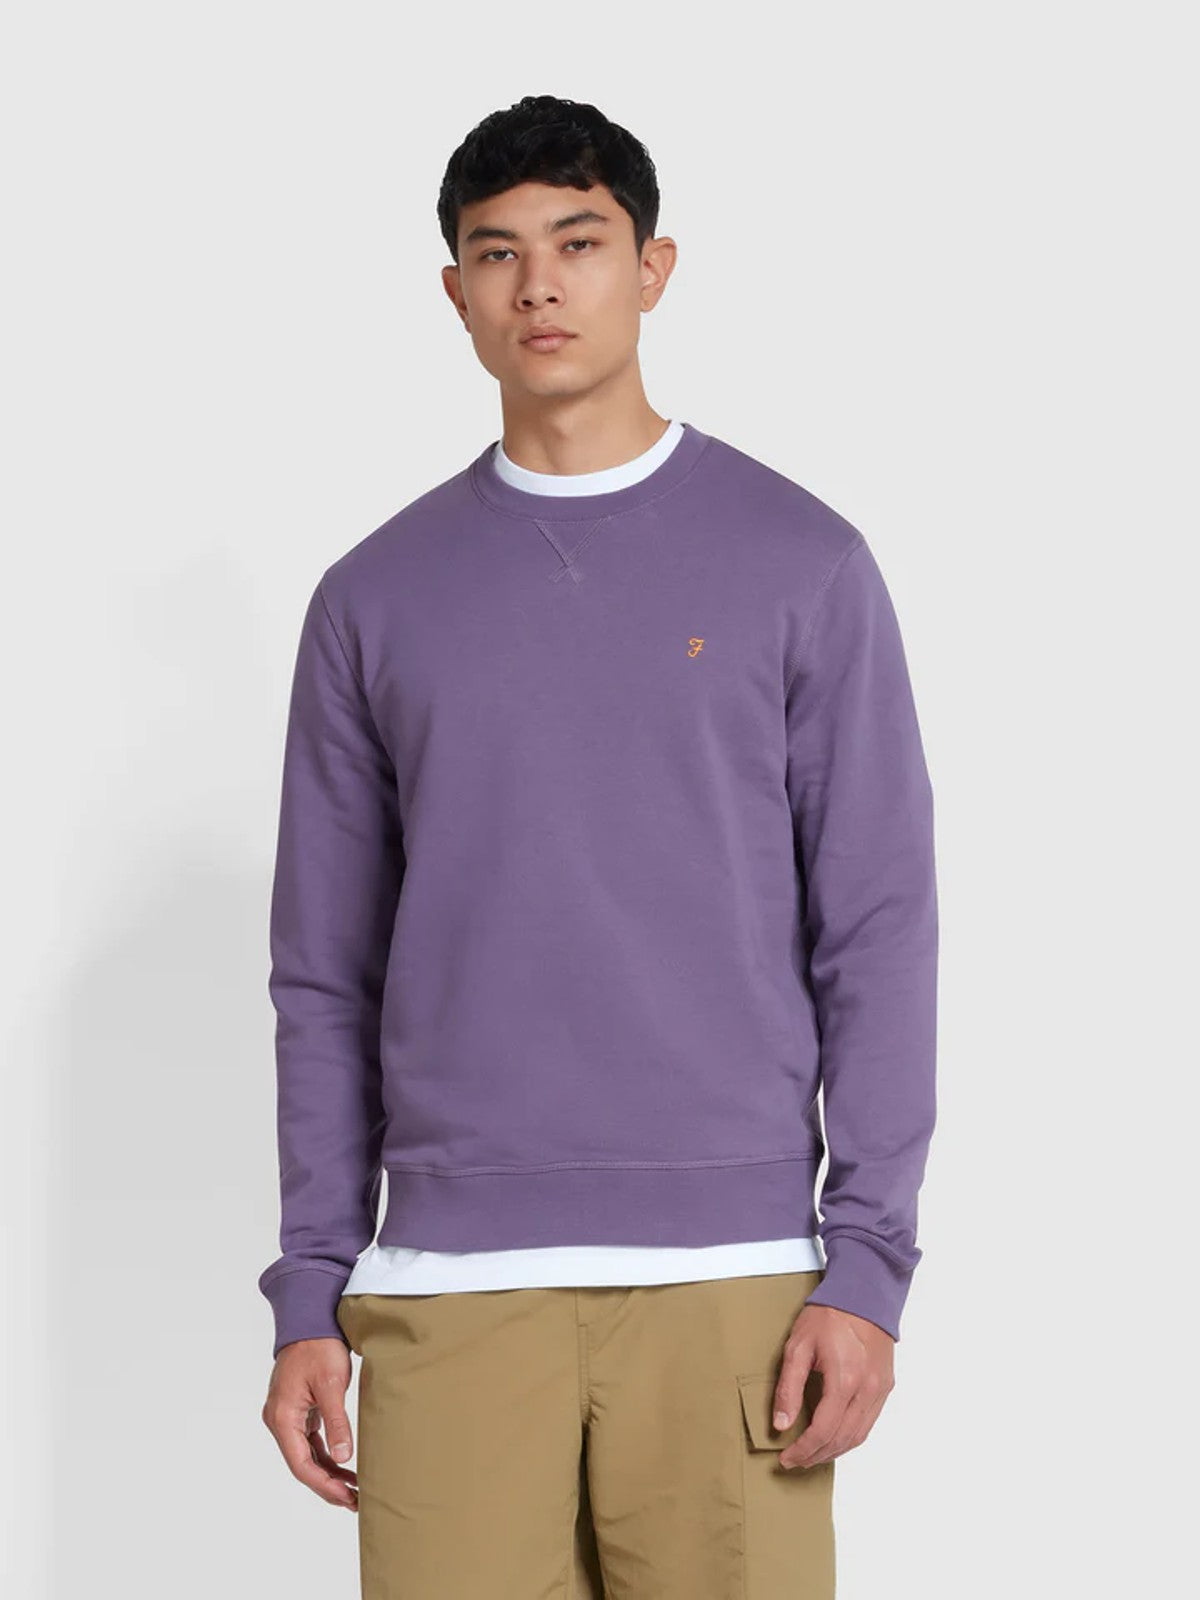 Tim Purple Sweatshirt